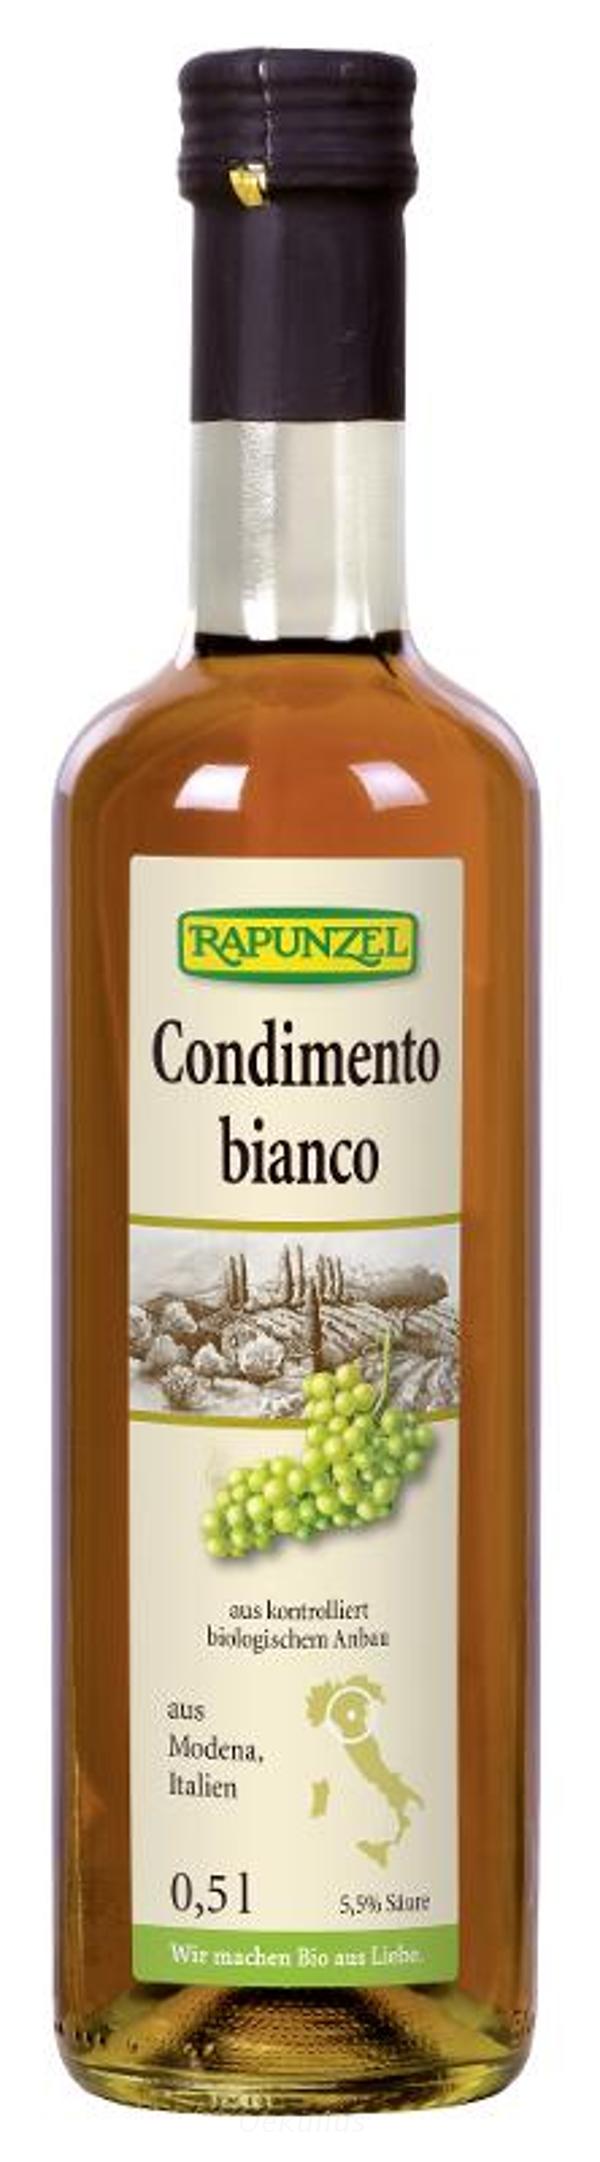 Produktfoto zu Balsamico Condimento Bianco